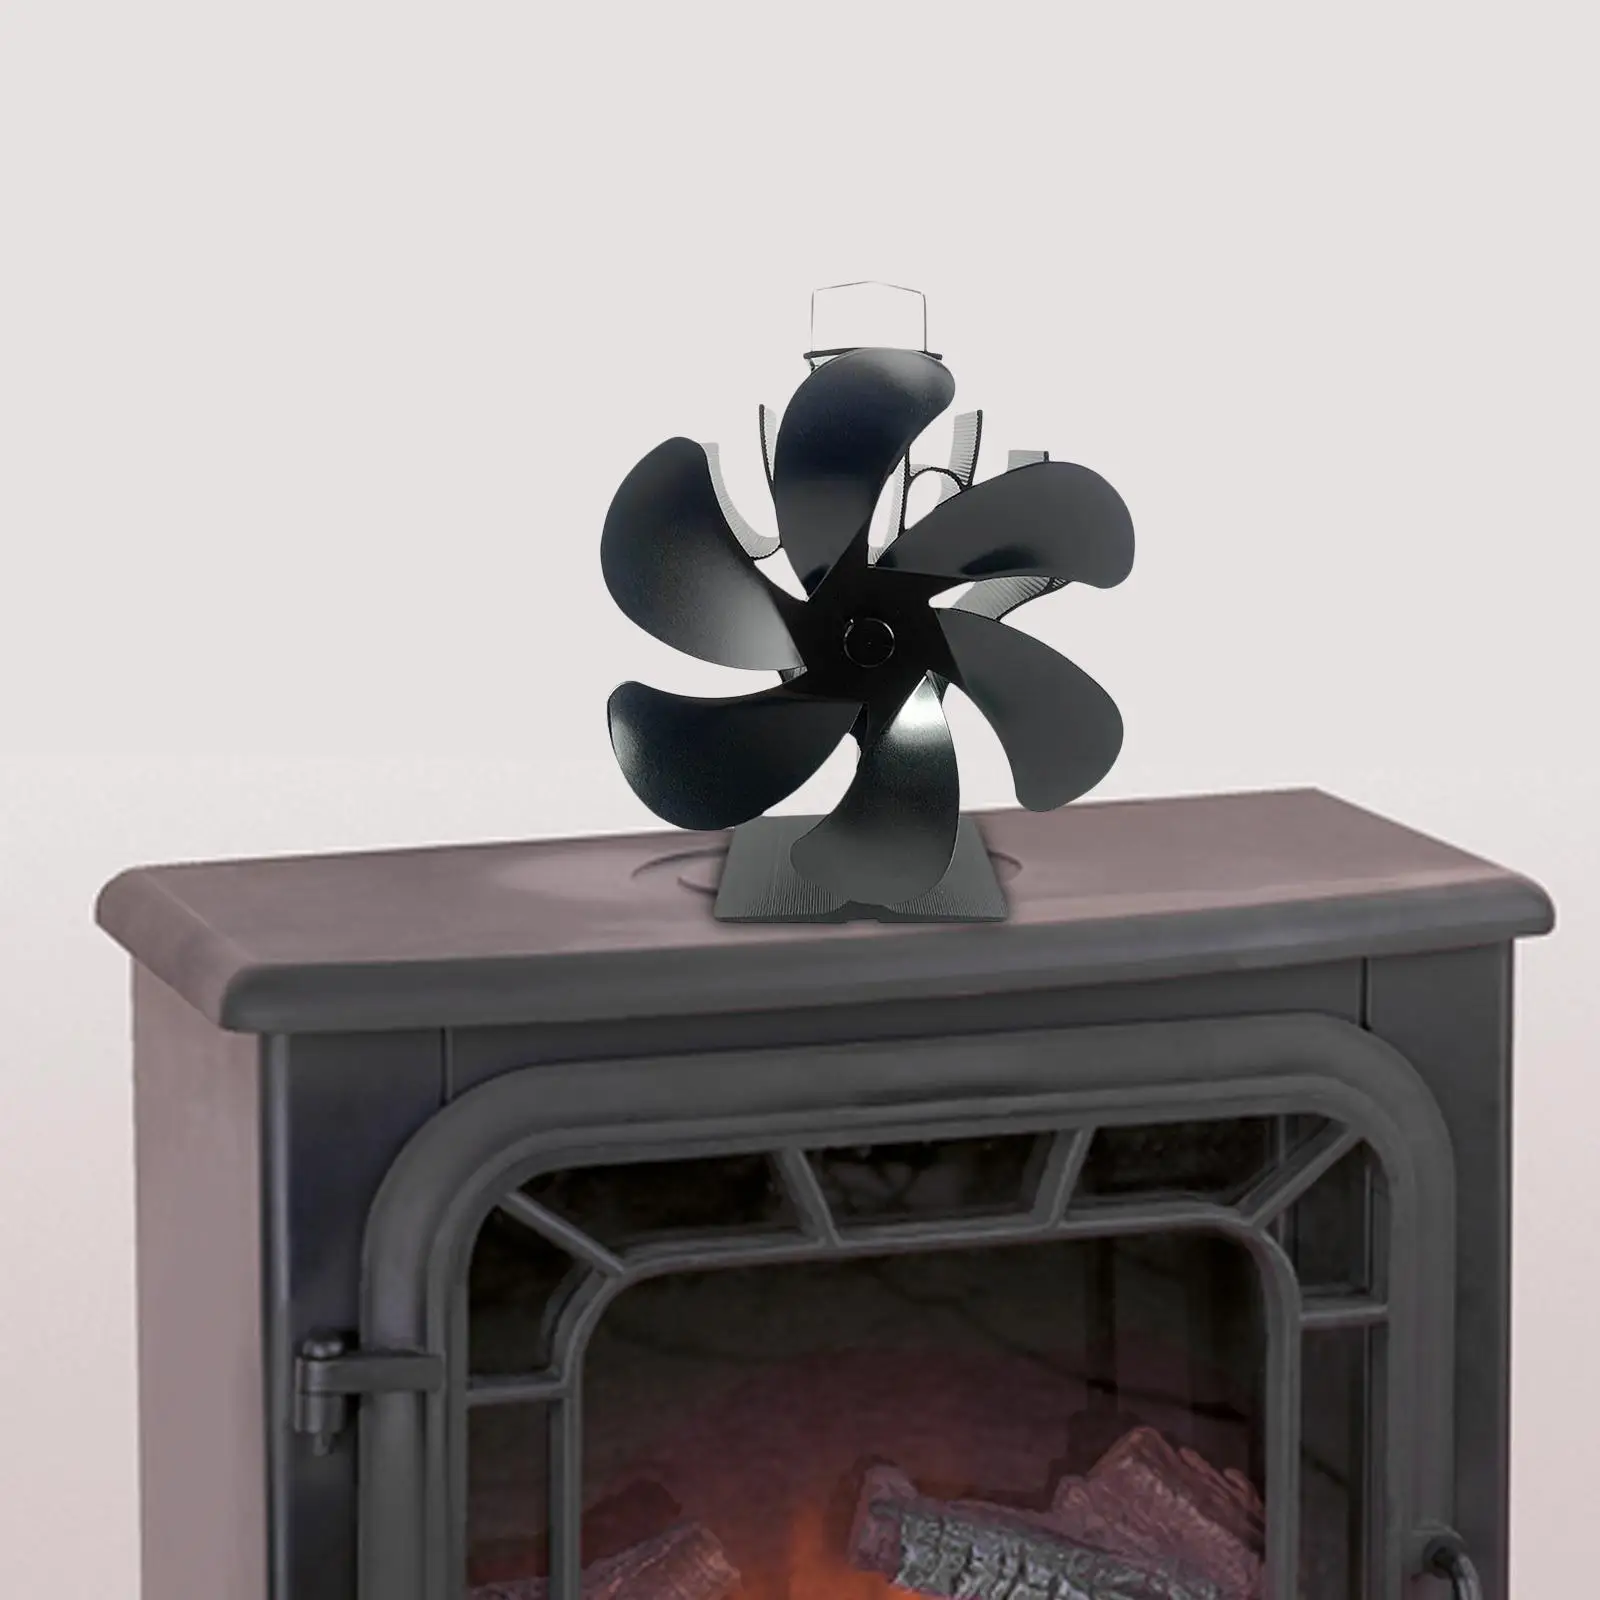 6 Blades Heat Powered Fireplace Fan Burner Fireplace Fan for Wood Stove Accessories Wood/log Burner Heaters Winter Home